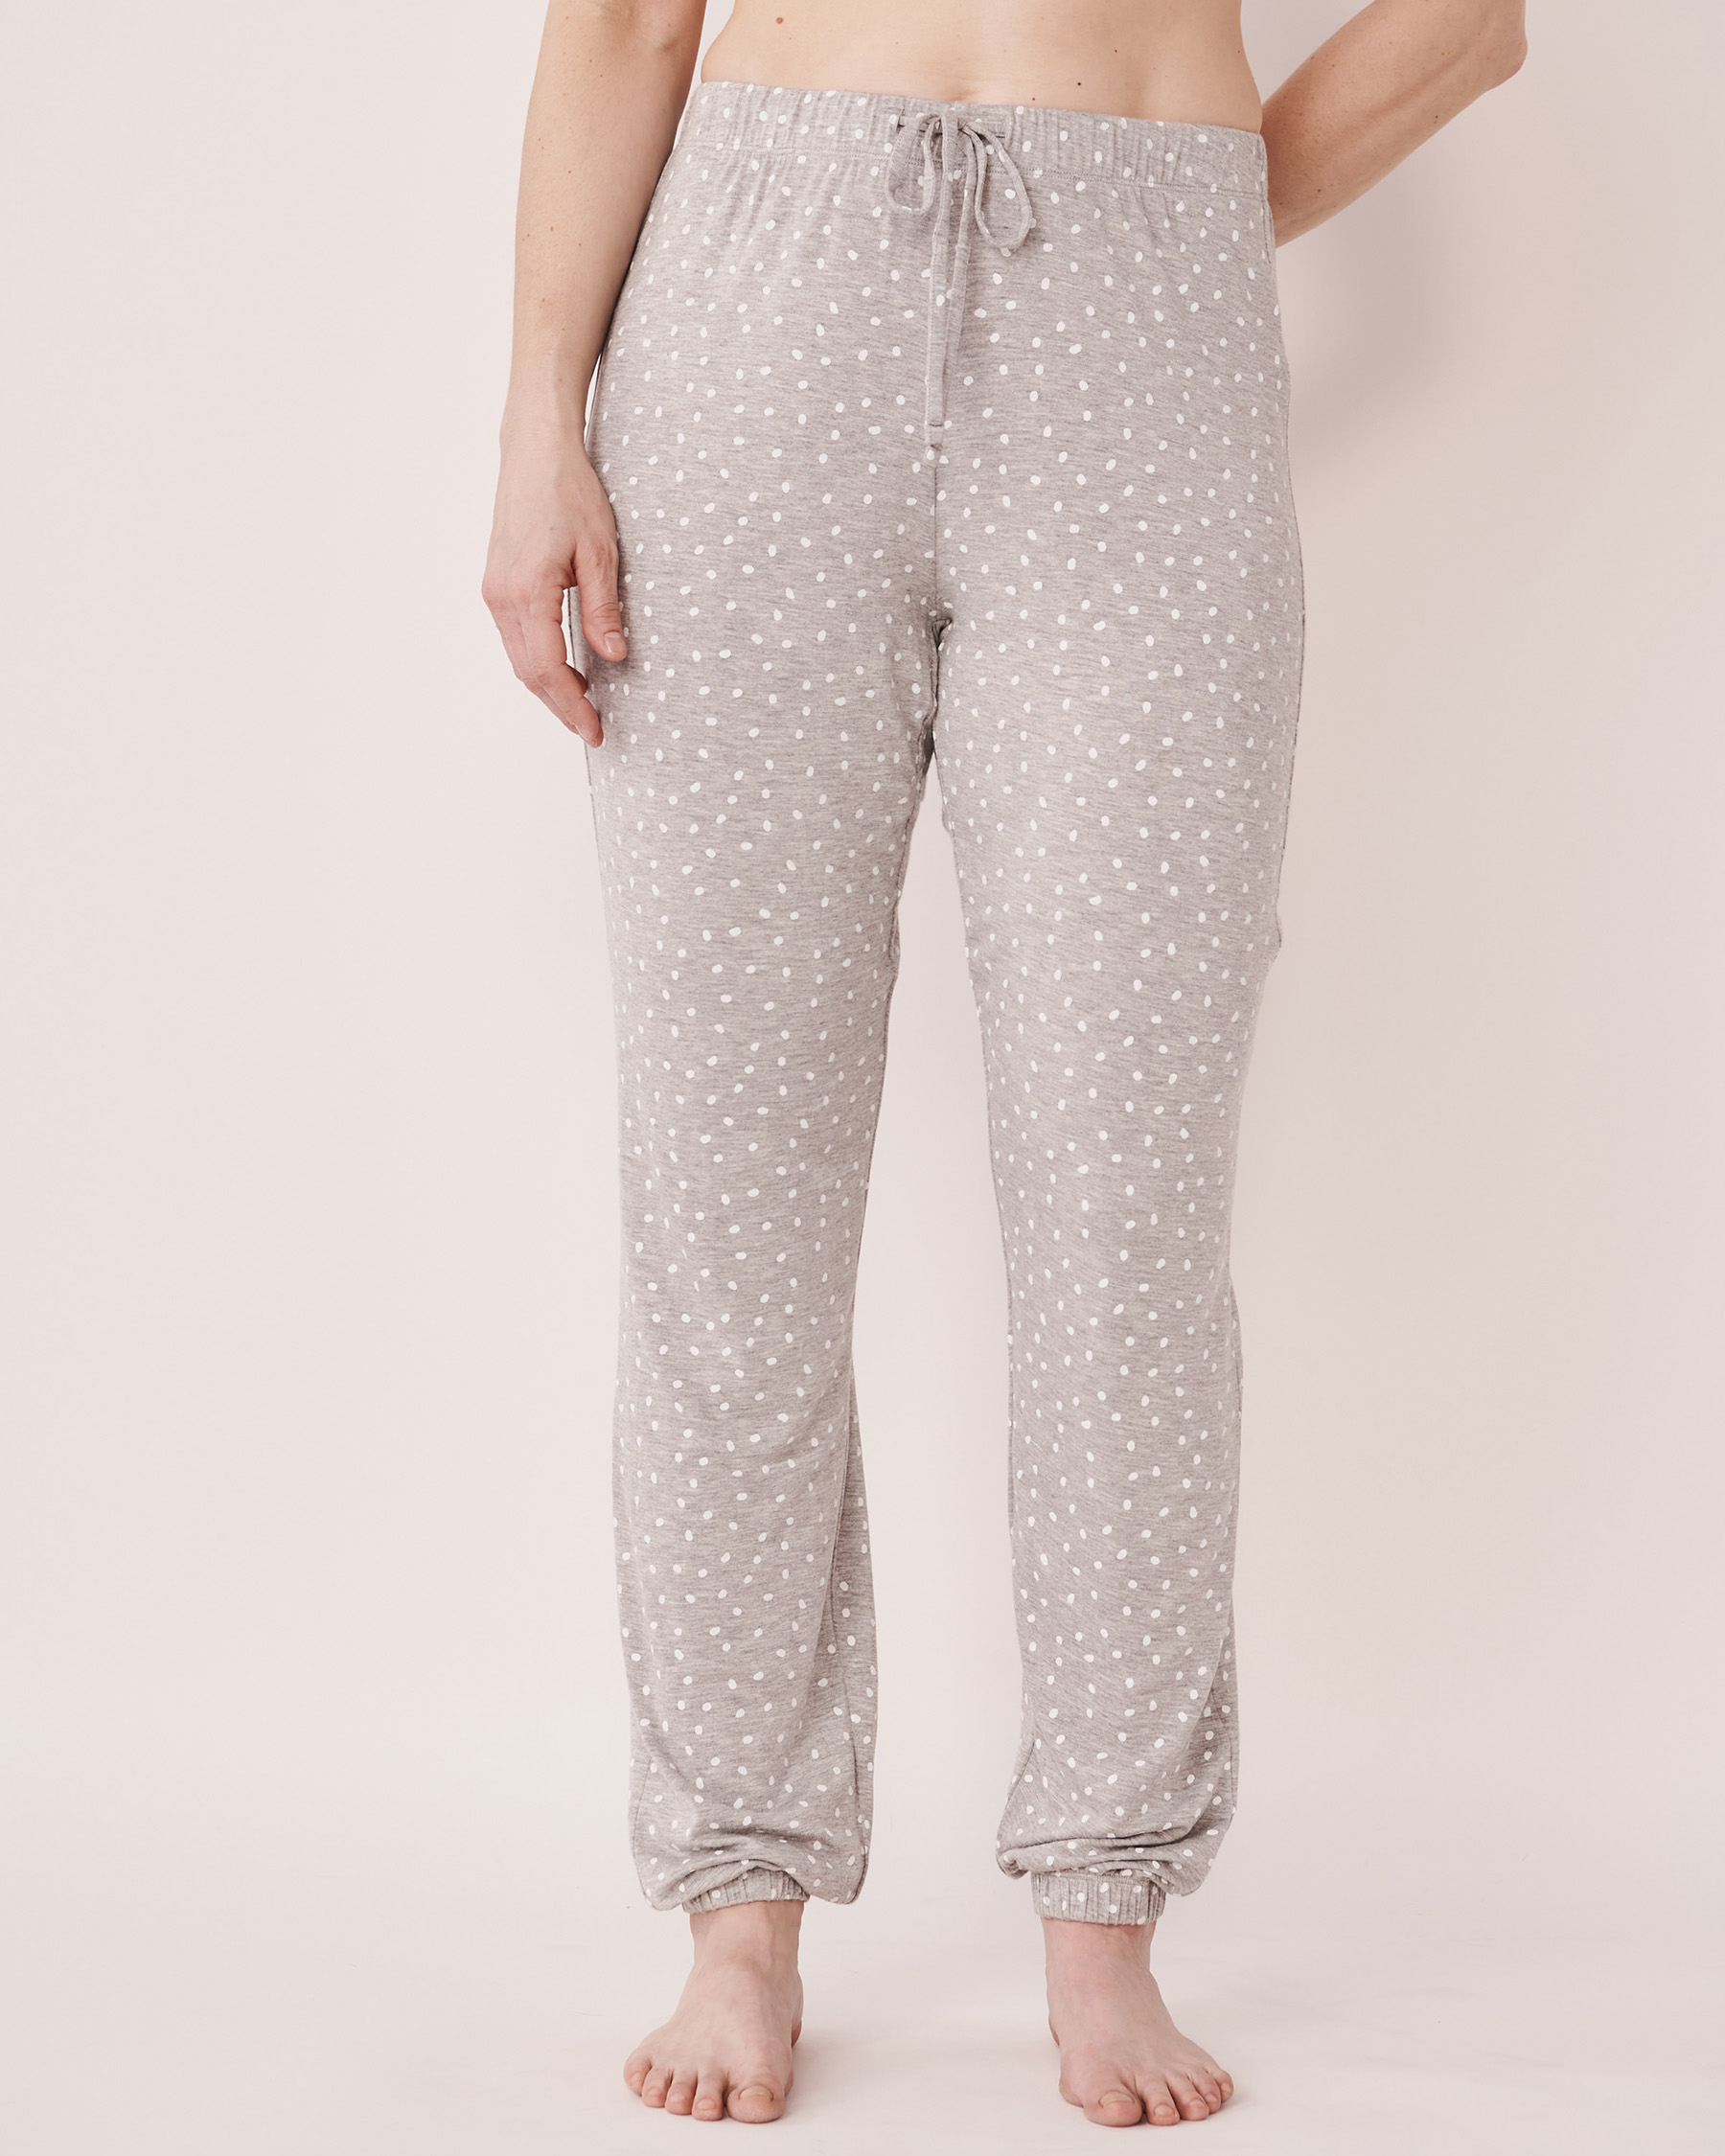 LA VIE EN ROSE Soft Knit Jersey Fitted Pants Grey dots 40200287 - View1